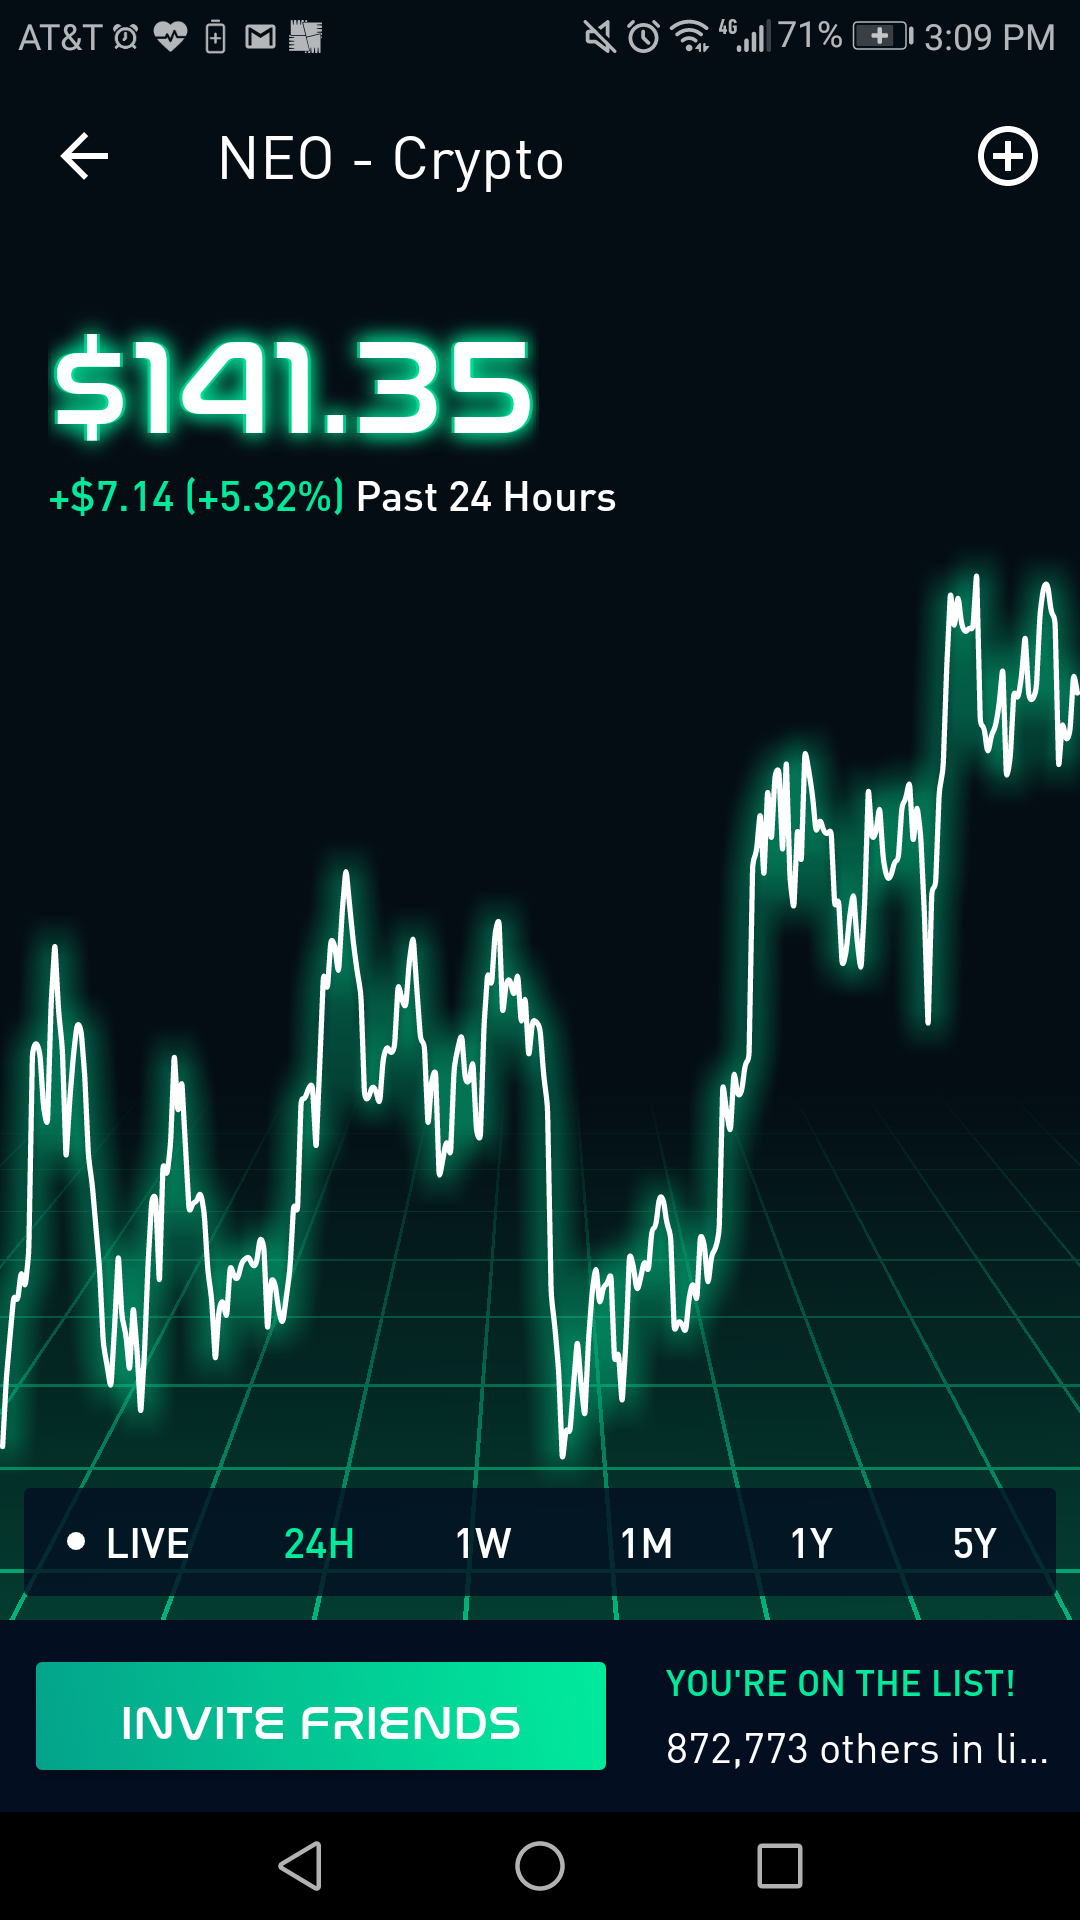 Robinhood Is Launching 24-Hour Weekday Stock Trading